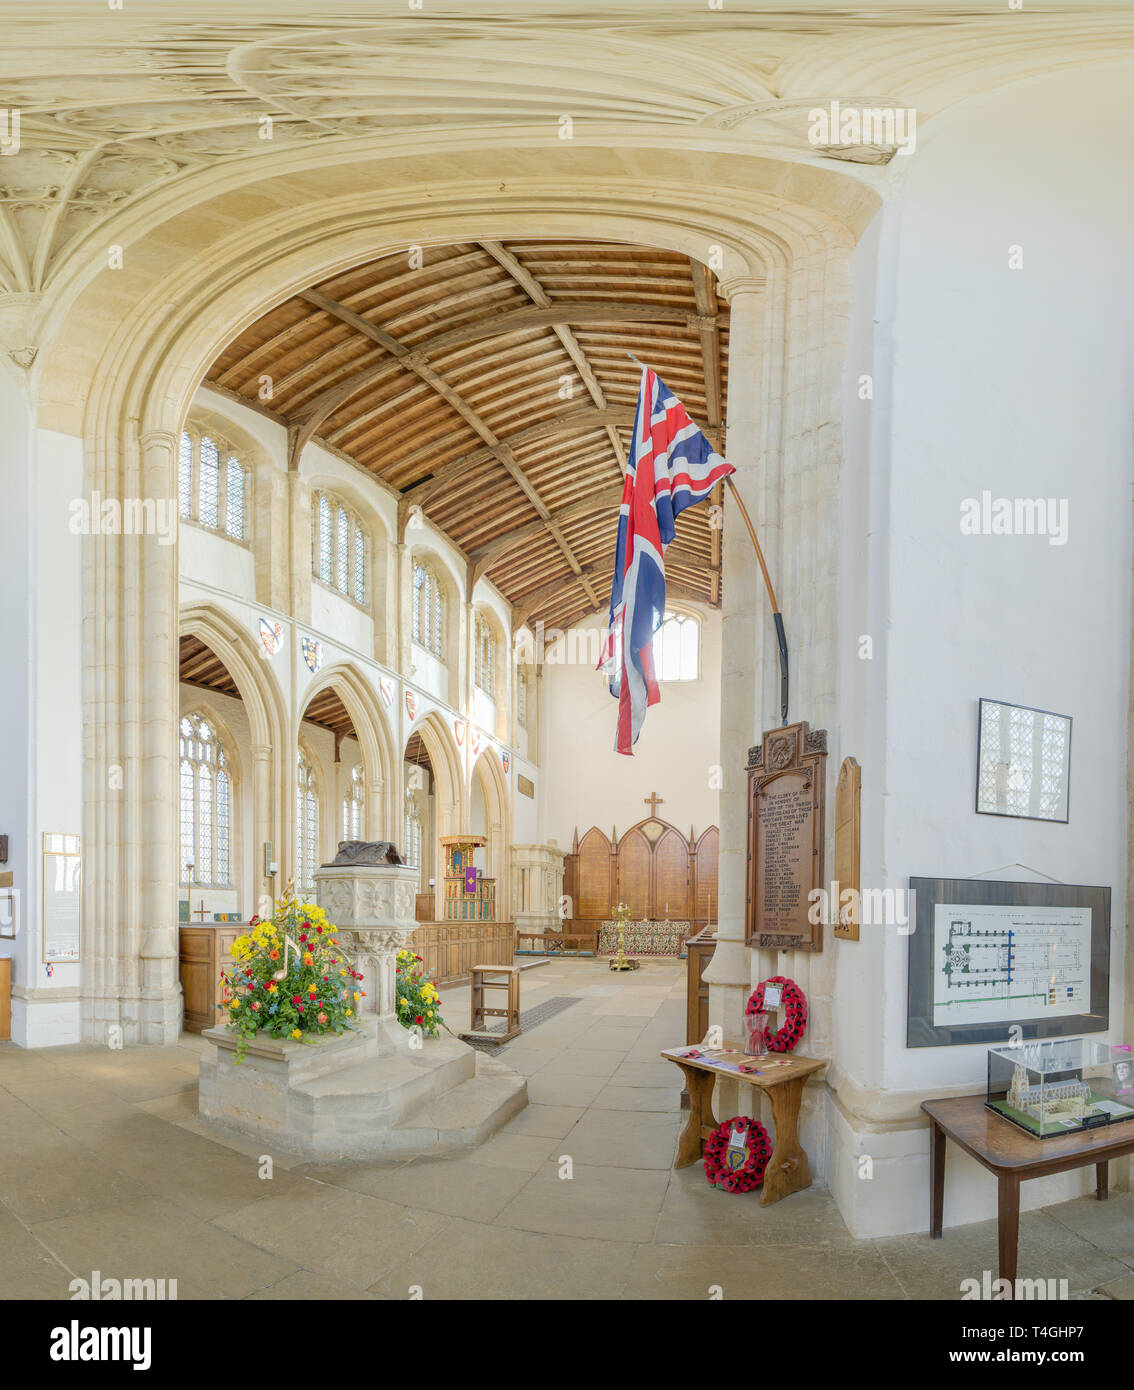 Il XIV secolo chiesa inglese a Fotheringhay, Inghilterra, base dell'Plantagenet Duca di York, luogo di nascita del re Richard III, e base Yorkist dur Foto Stock